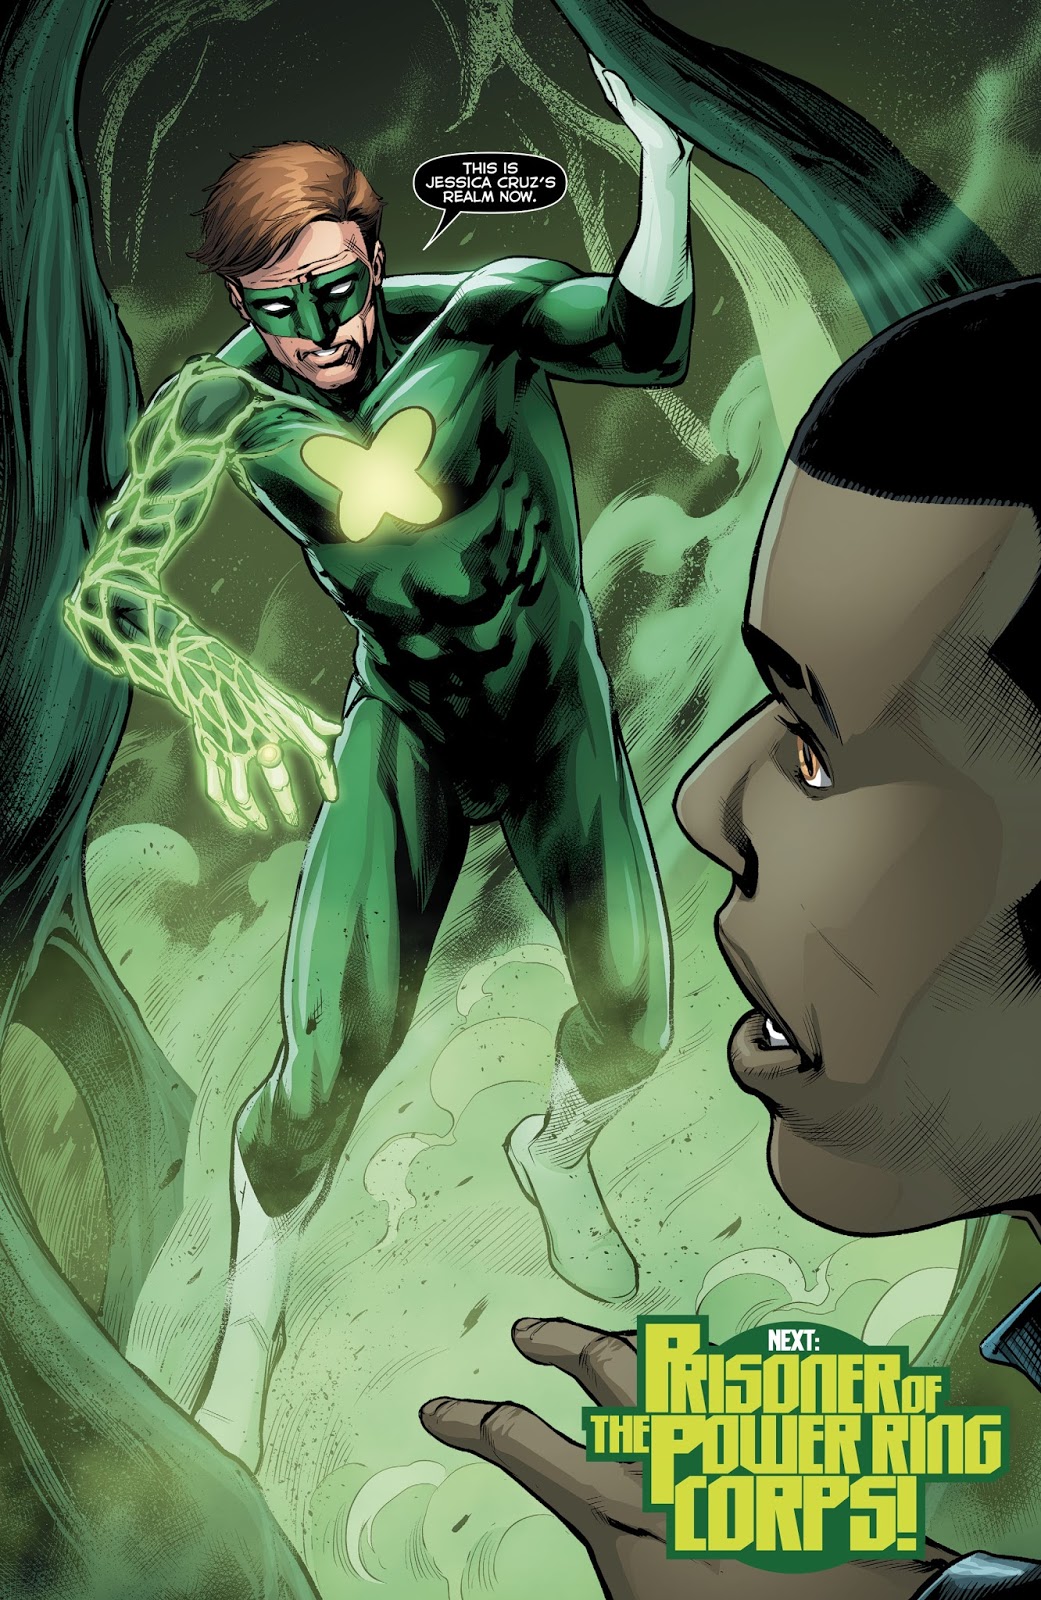 Power Ring (Green Lanterns Vol. 1 #45)